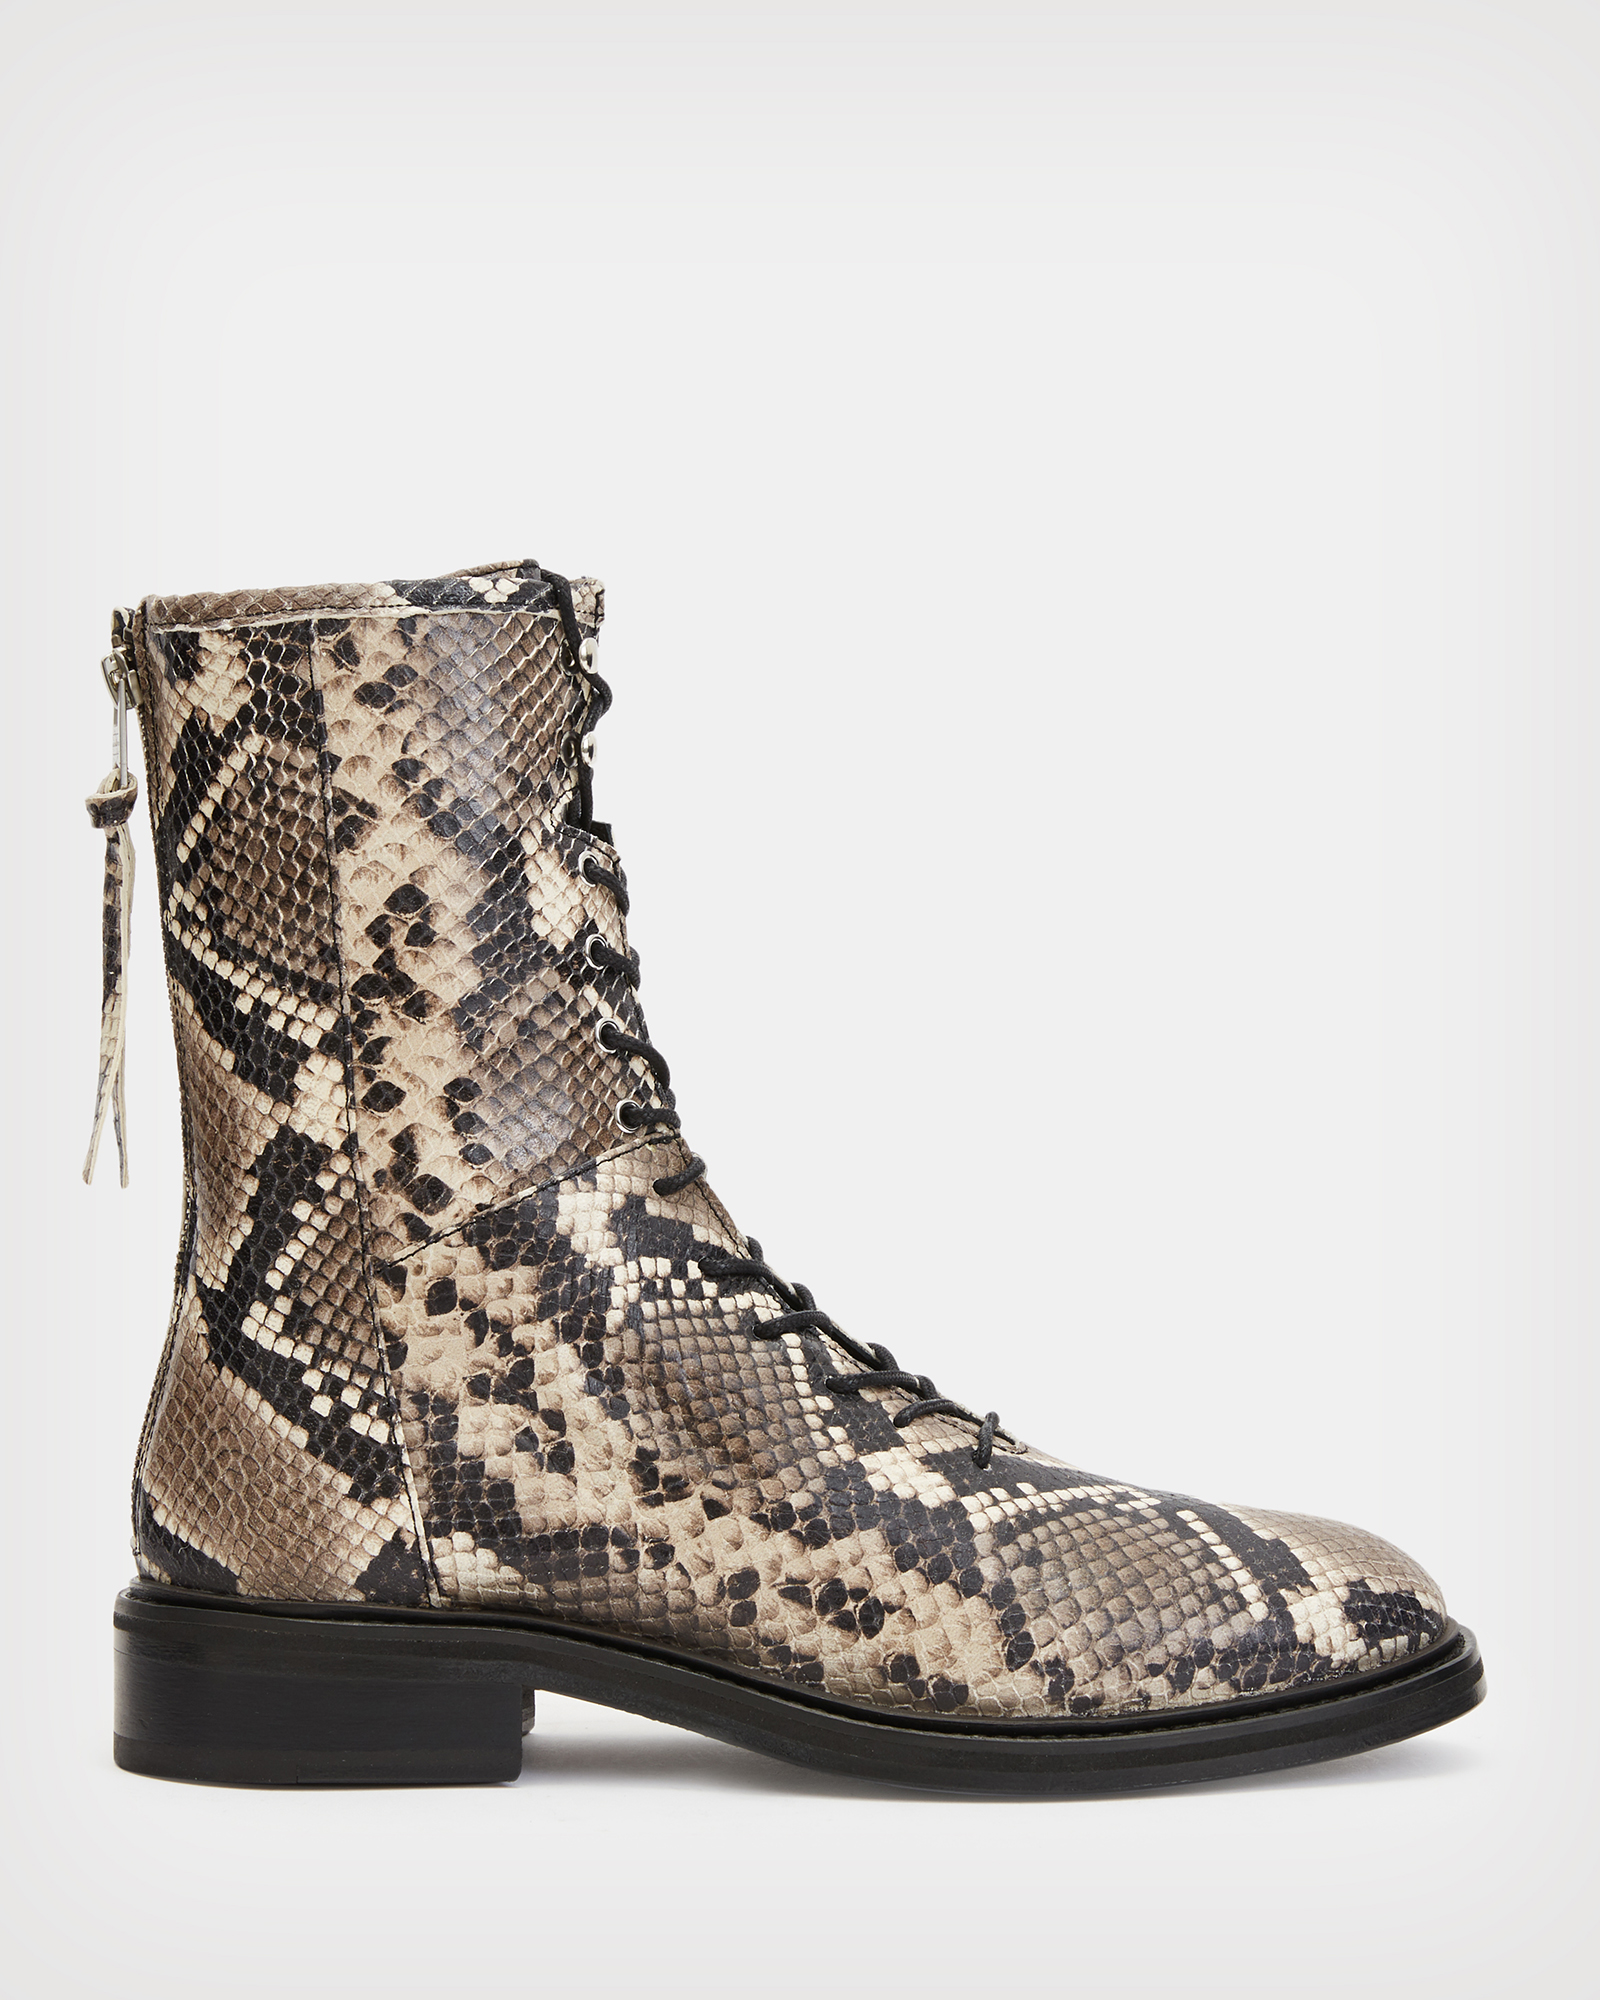 AllSaints Women's Leather Snakeskin Misty Boots, Grey and Beige, Size: UK 4/ US 7/ EU 37